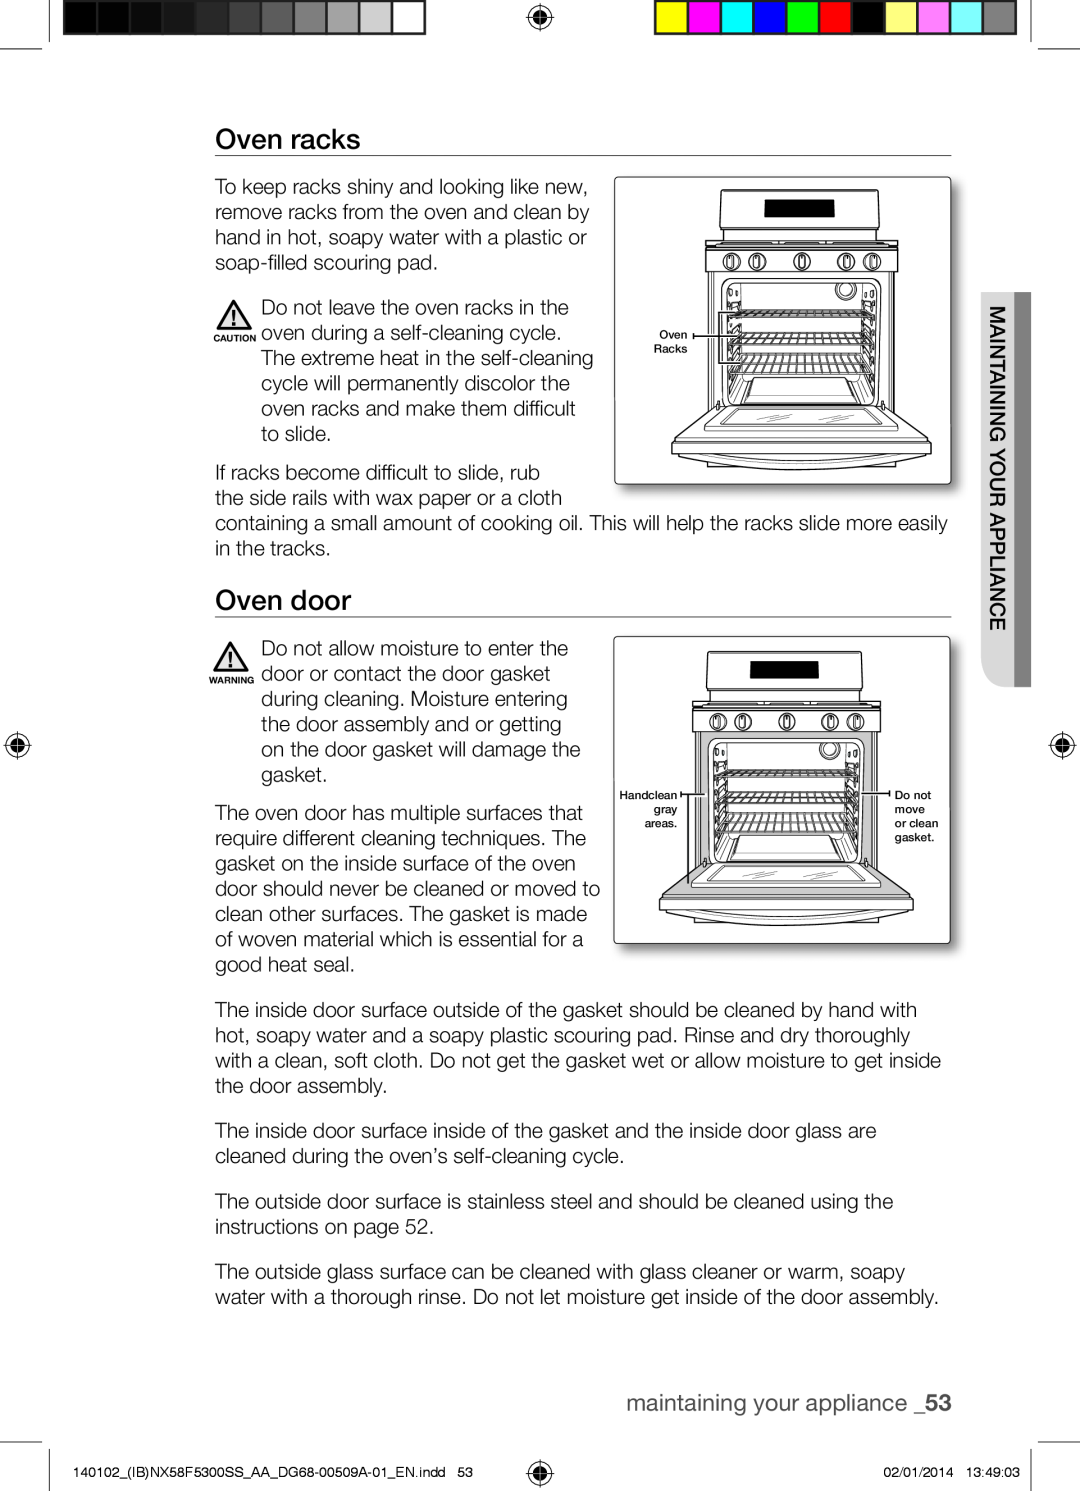 Samsung NX58F5500SW user manual Oven racks, Oven door, maintaining your appliance 